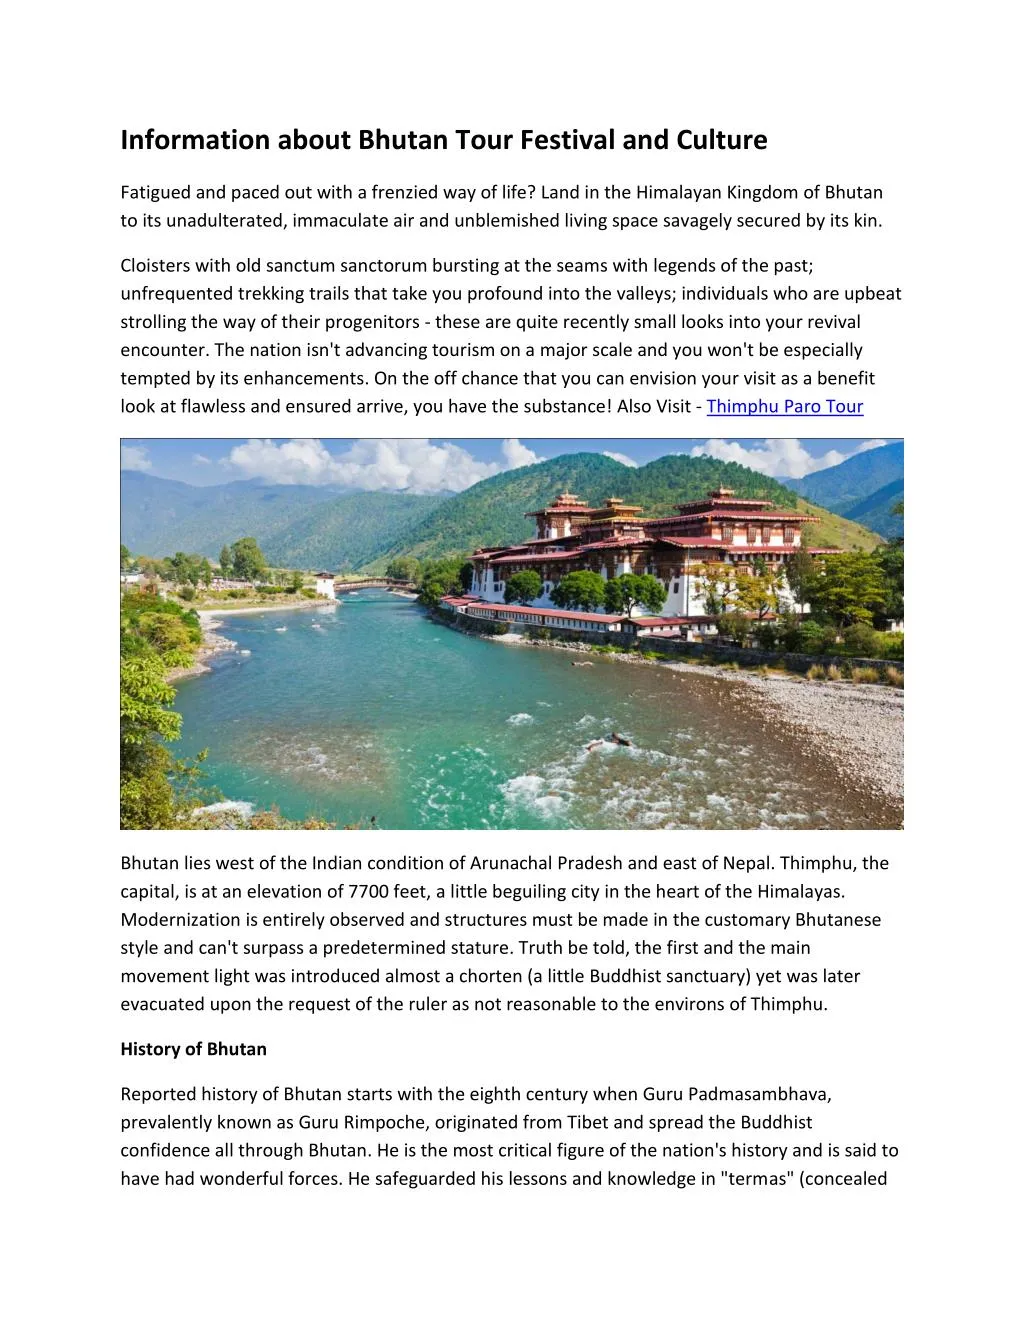 information about bhutan tour festival and culture